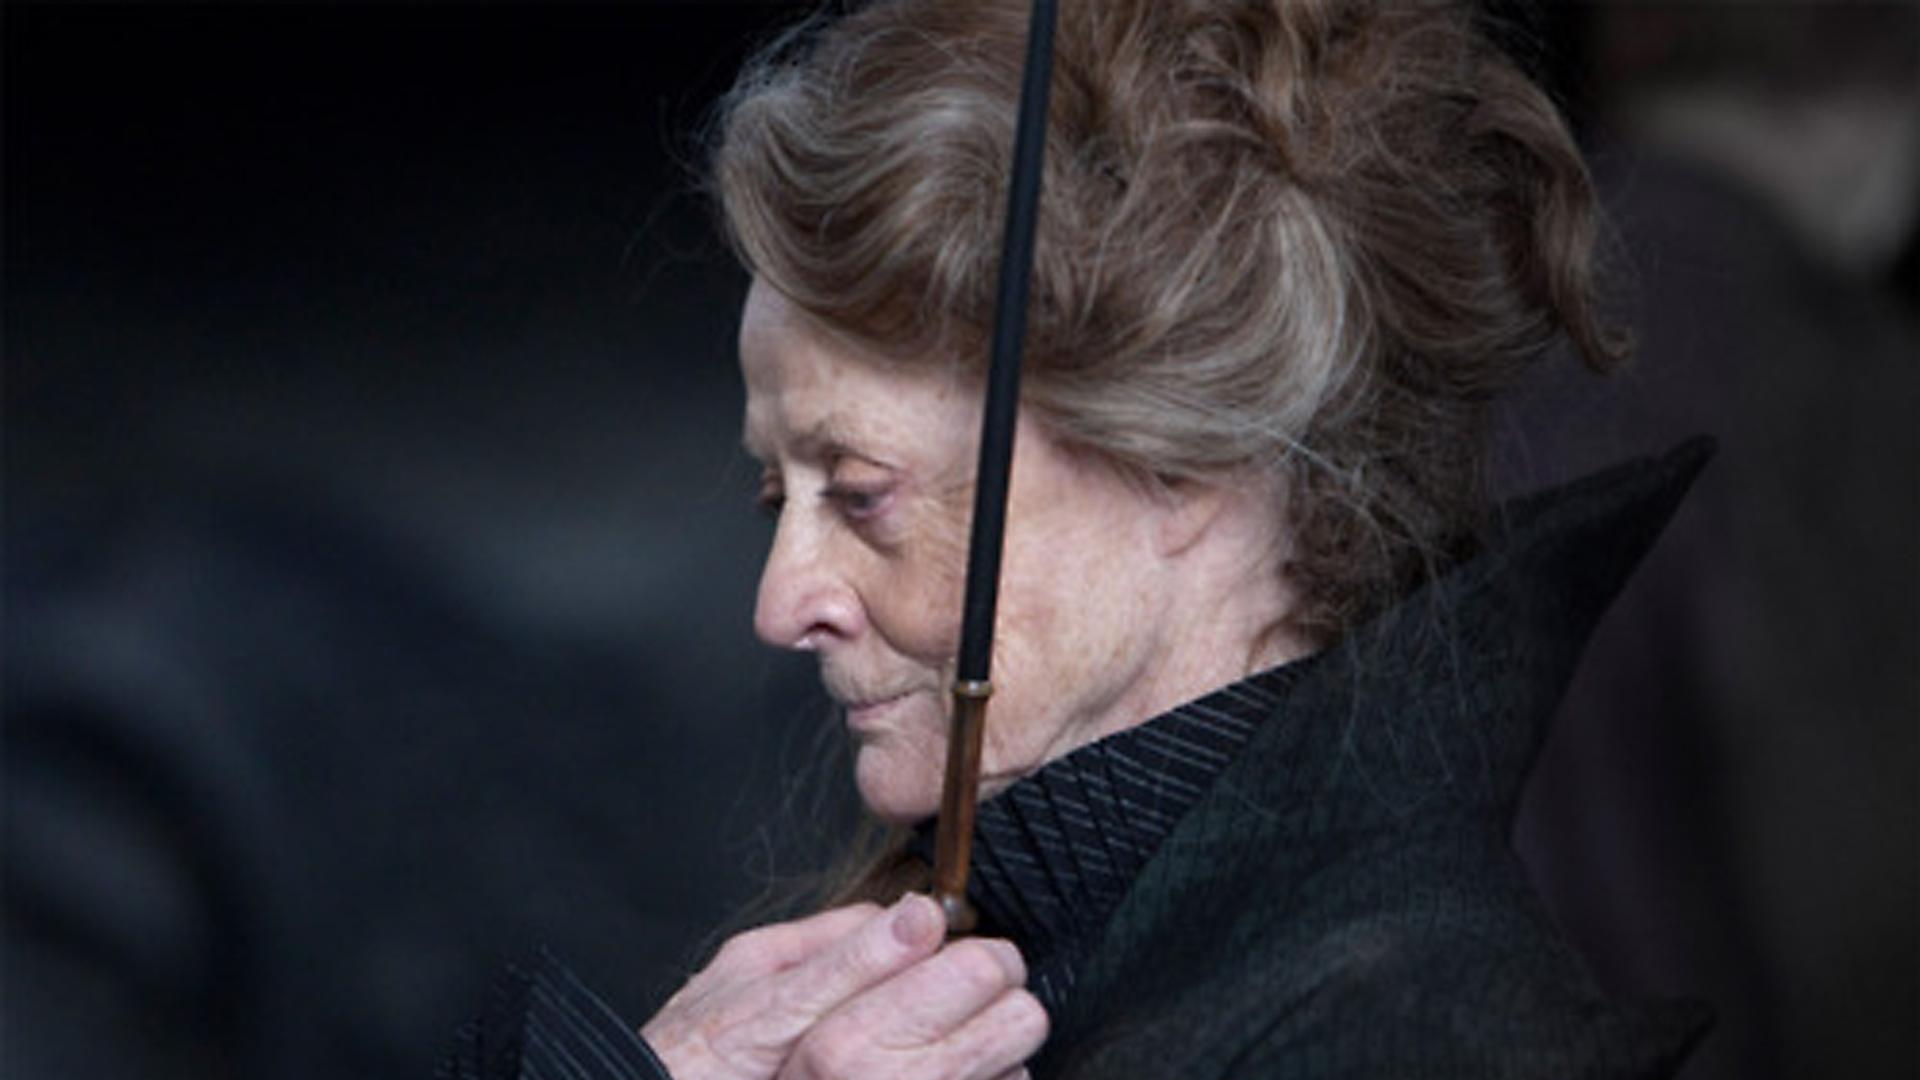 Minerva McGonagall deserves her own film